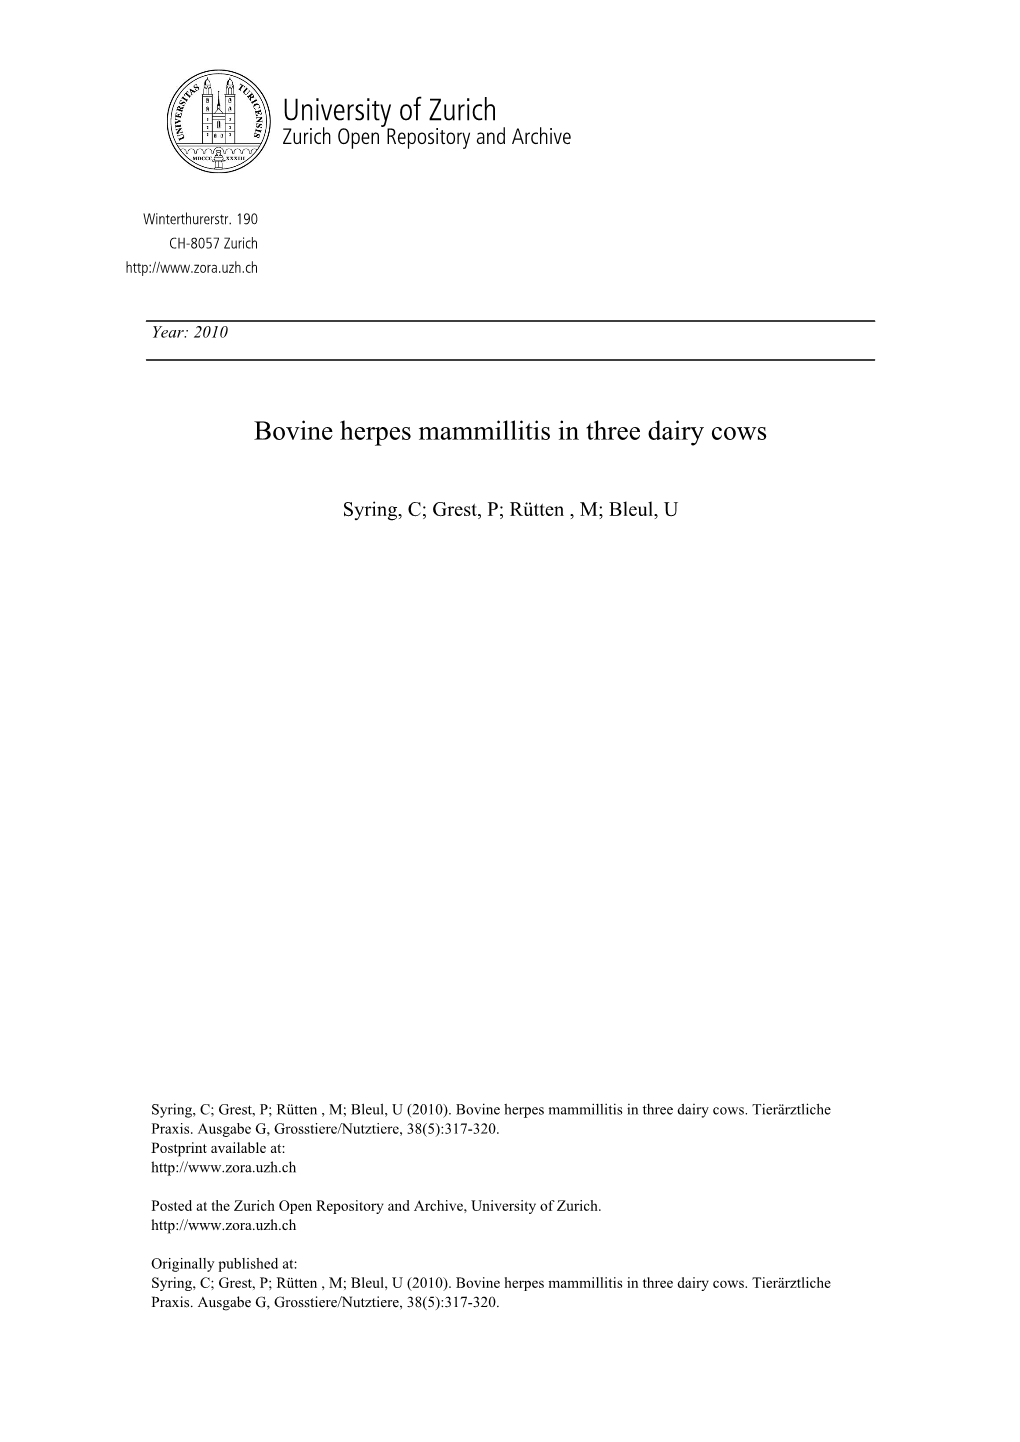 'Bovine Herpes Mammillitis in Three Dairy Cows'